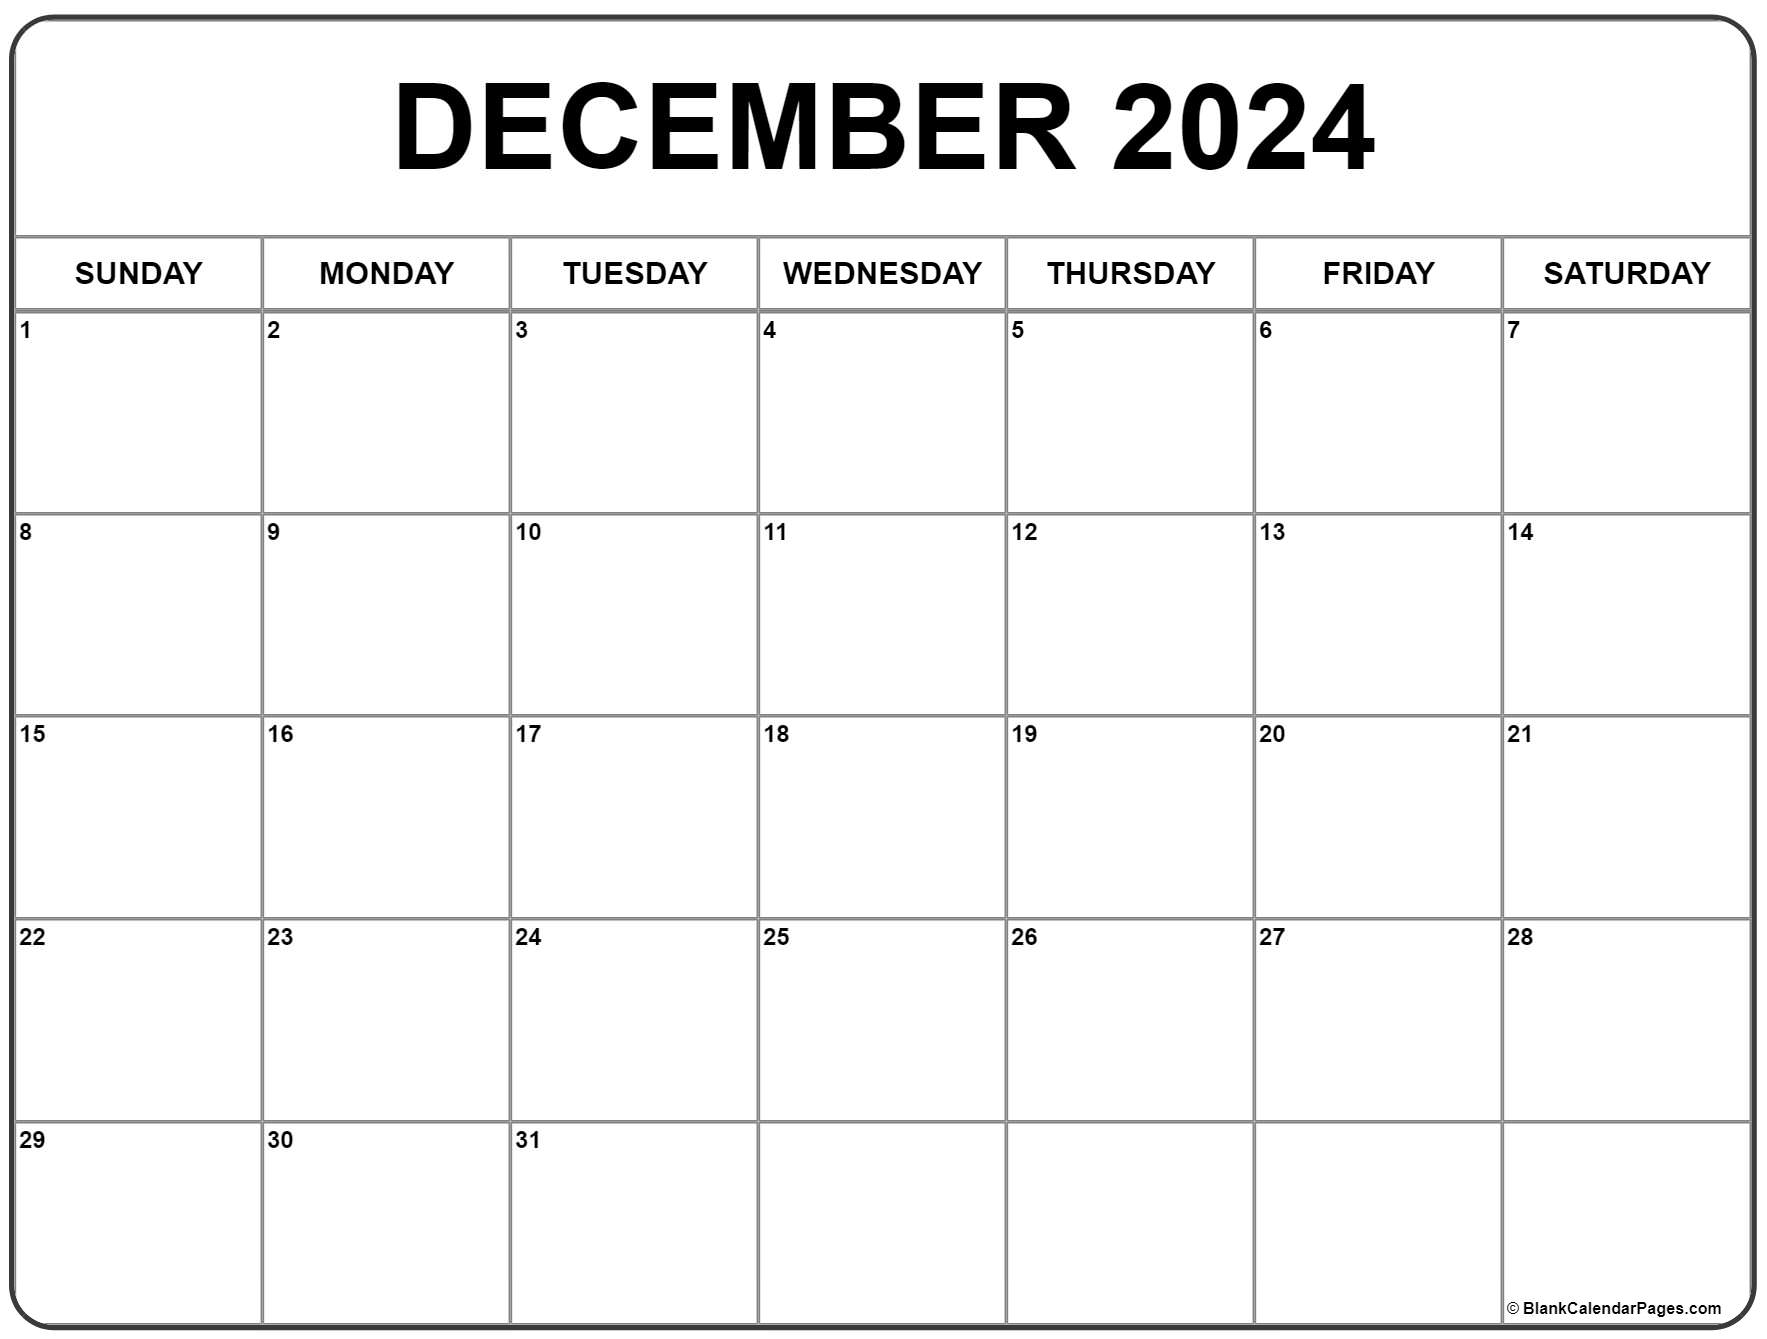 December Calendar 2022 December 2022 Calendar | Free Printable Calendar Templates